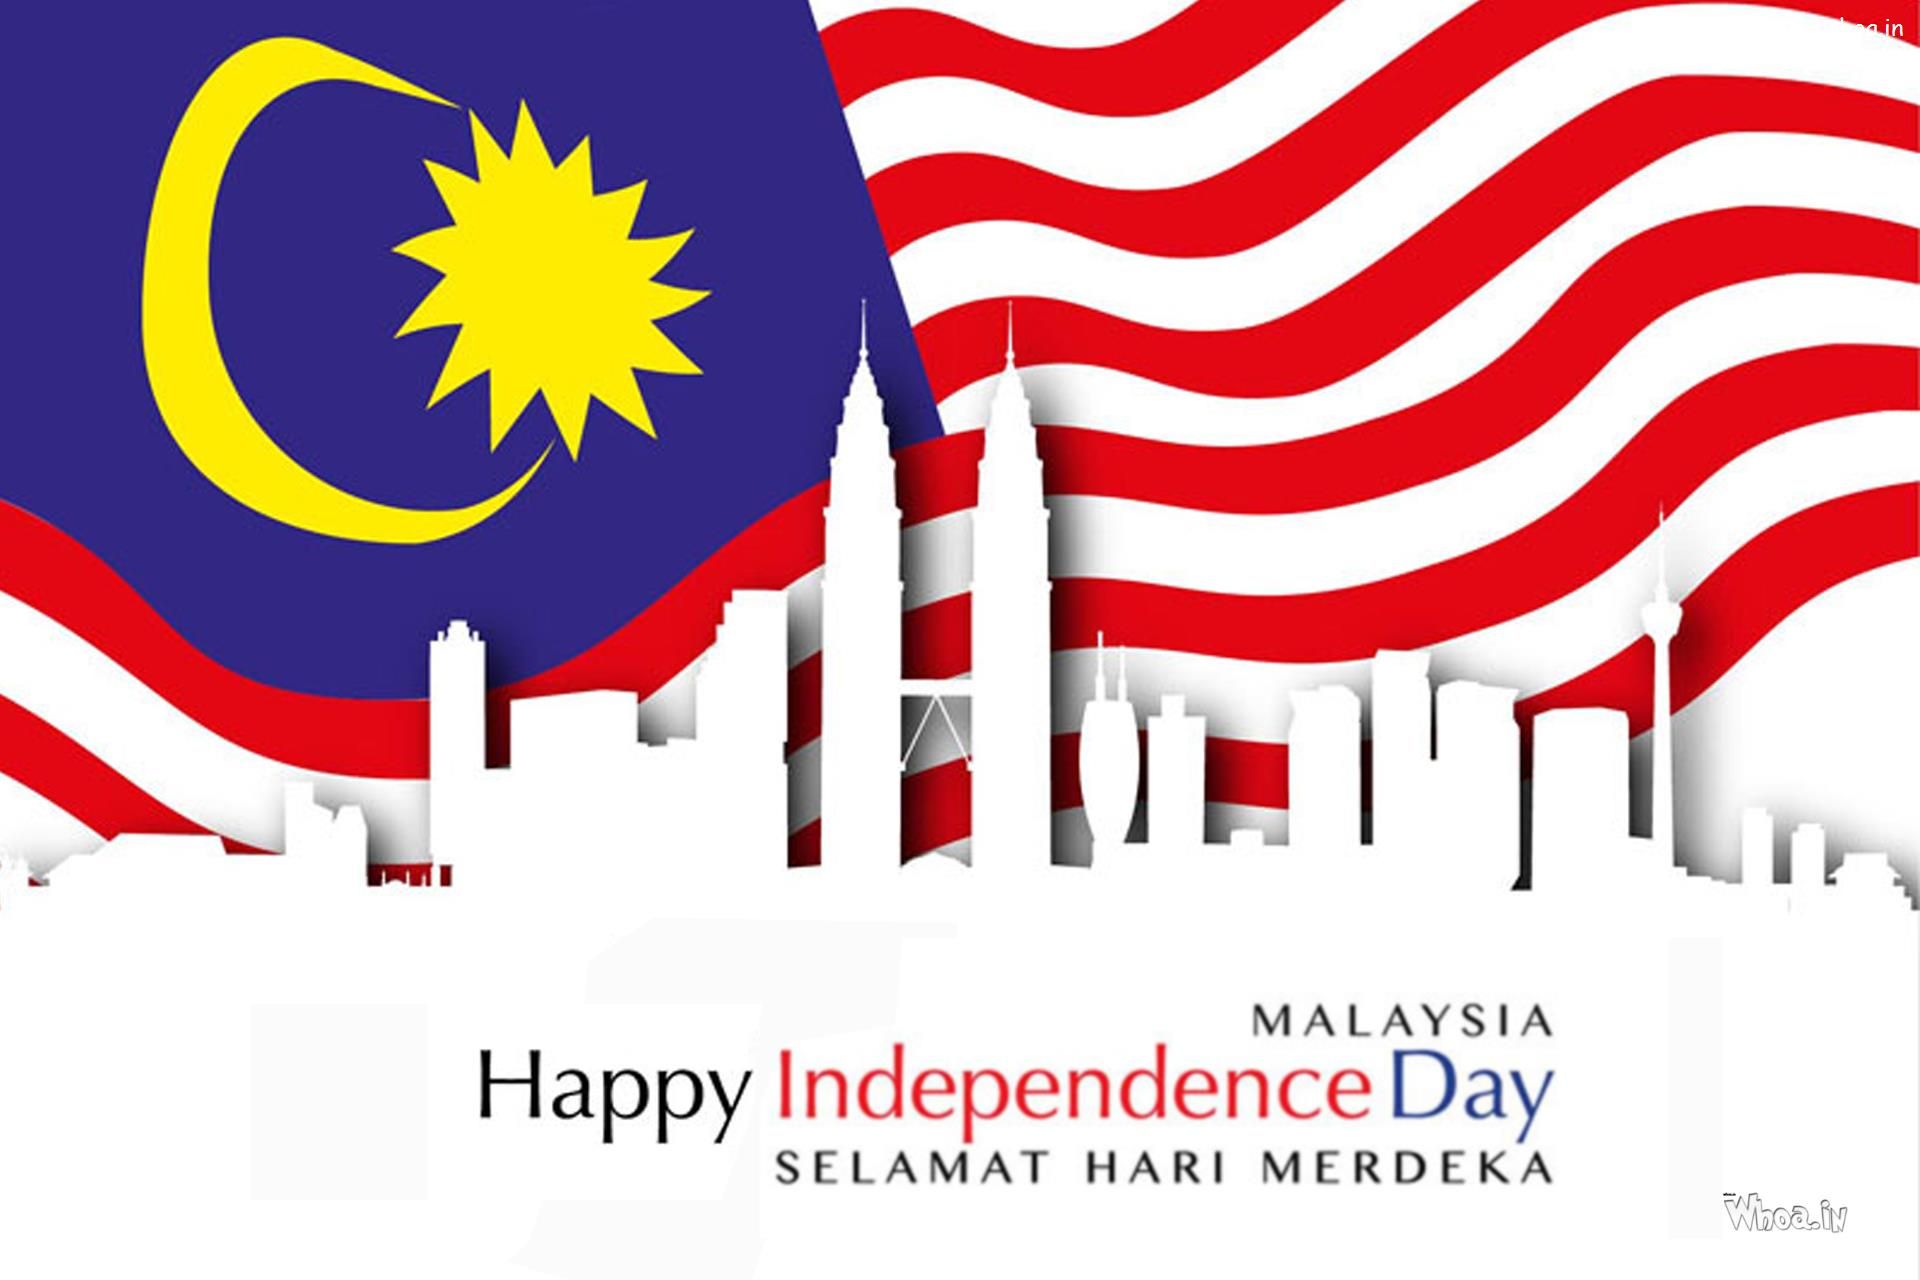 The Malaysia's Independence Day Selamat Hari Merdeka